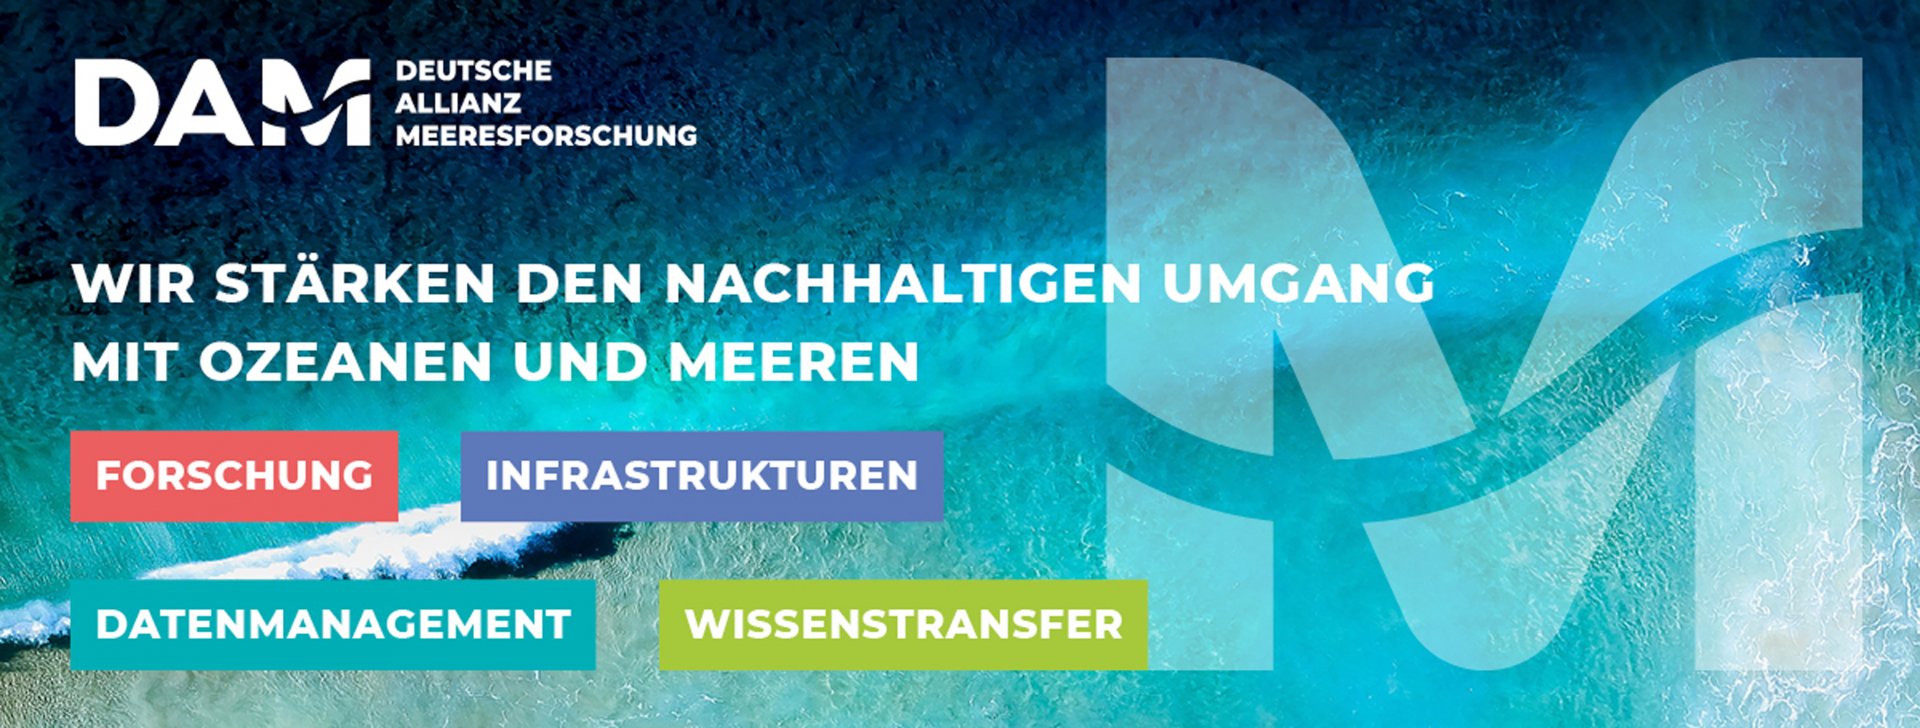 DAM – Deutsche Allianz Meeresforschung